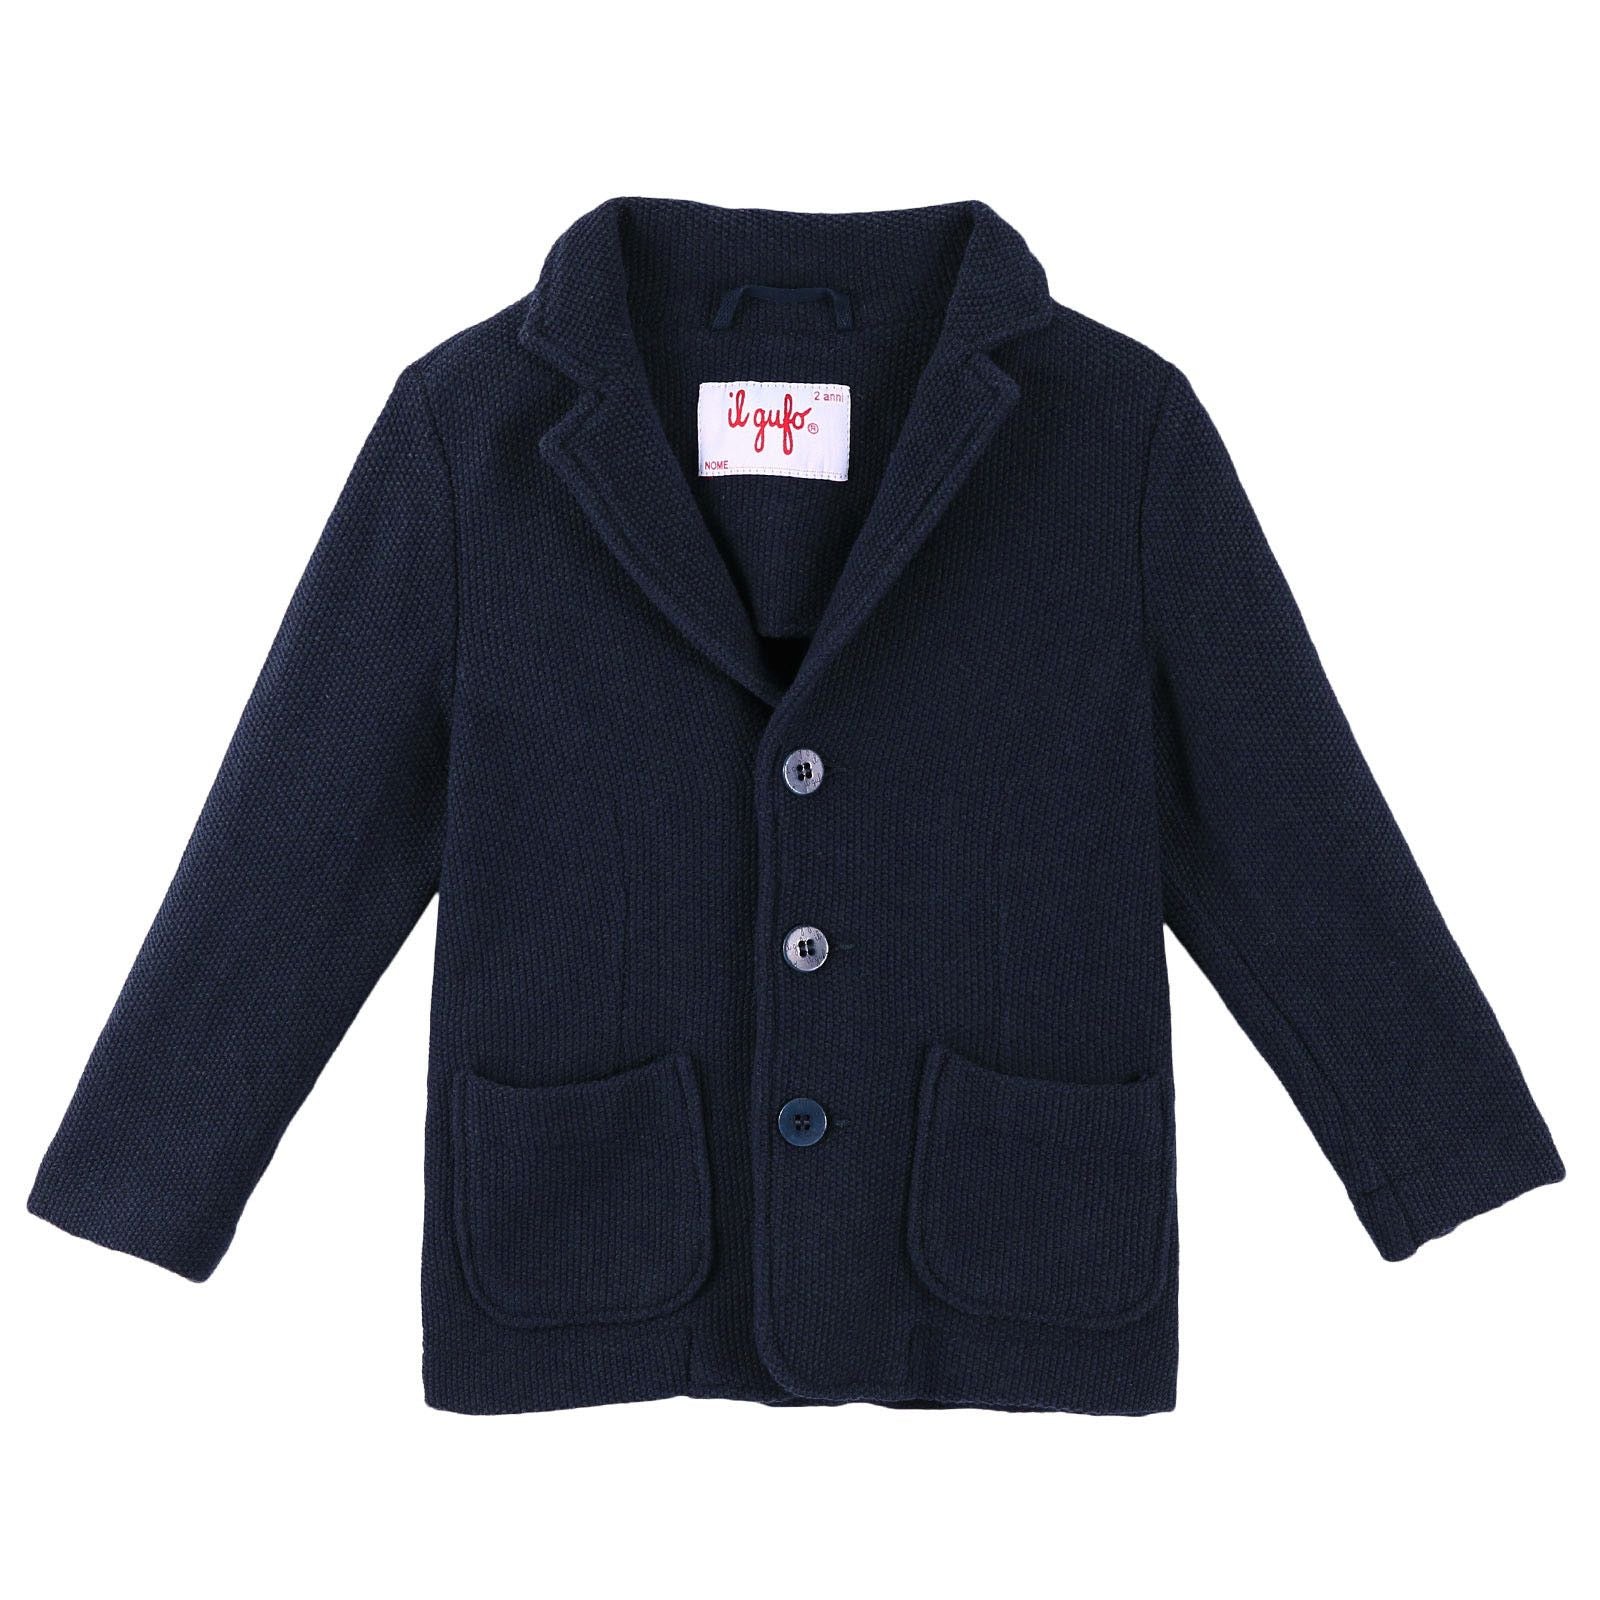 Boys Navy Blue Cotton Knitted Blazer - CÉMAROSE | Children's Fashion Store - 1